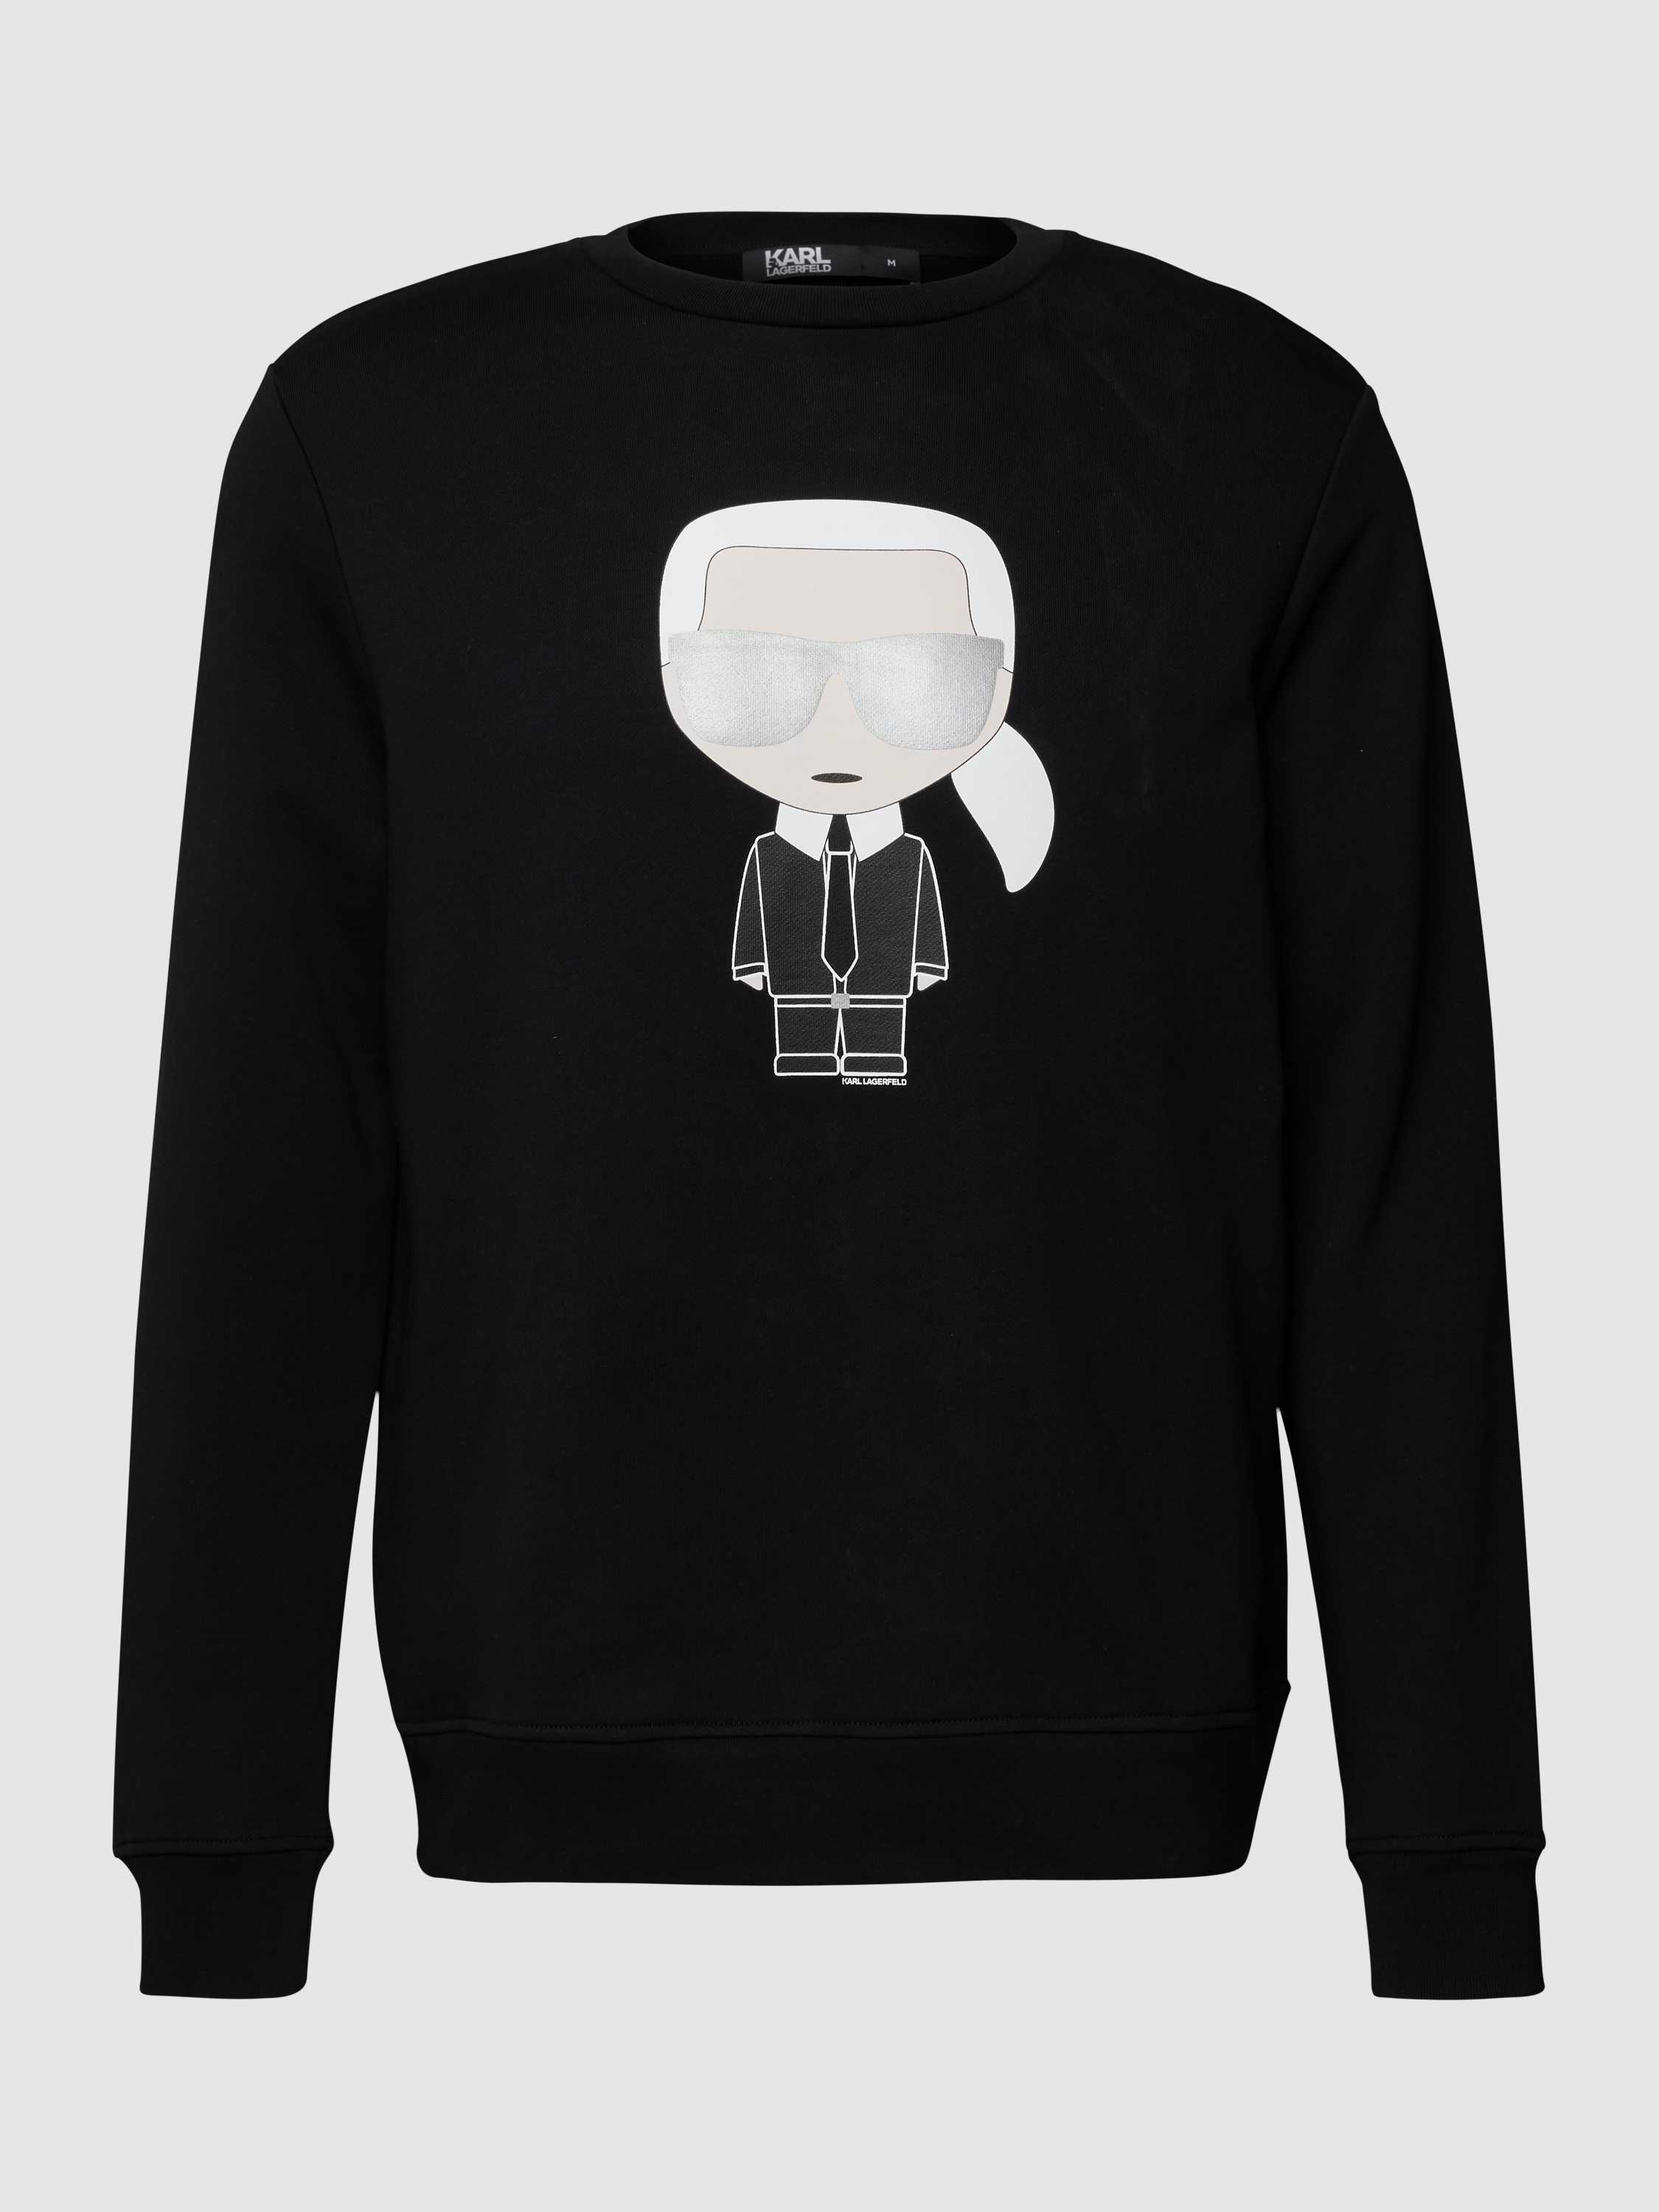 Sweatshirt mit Karl-Print